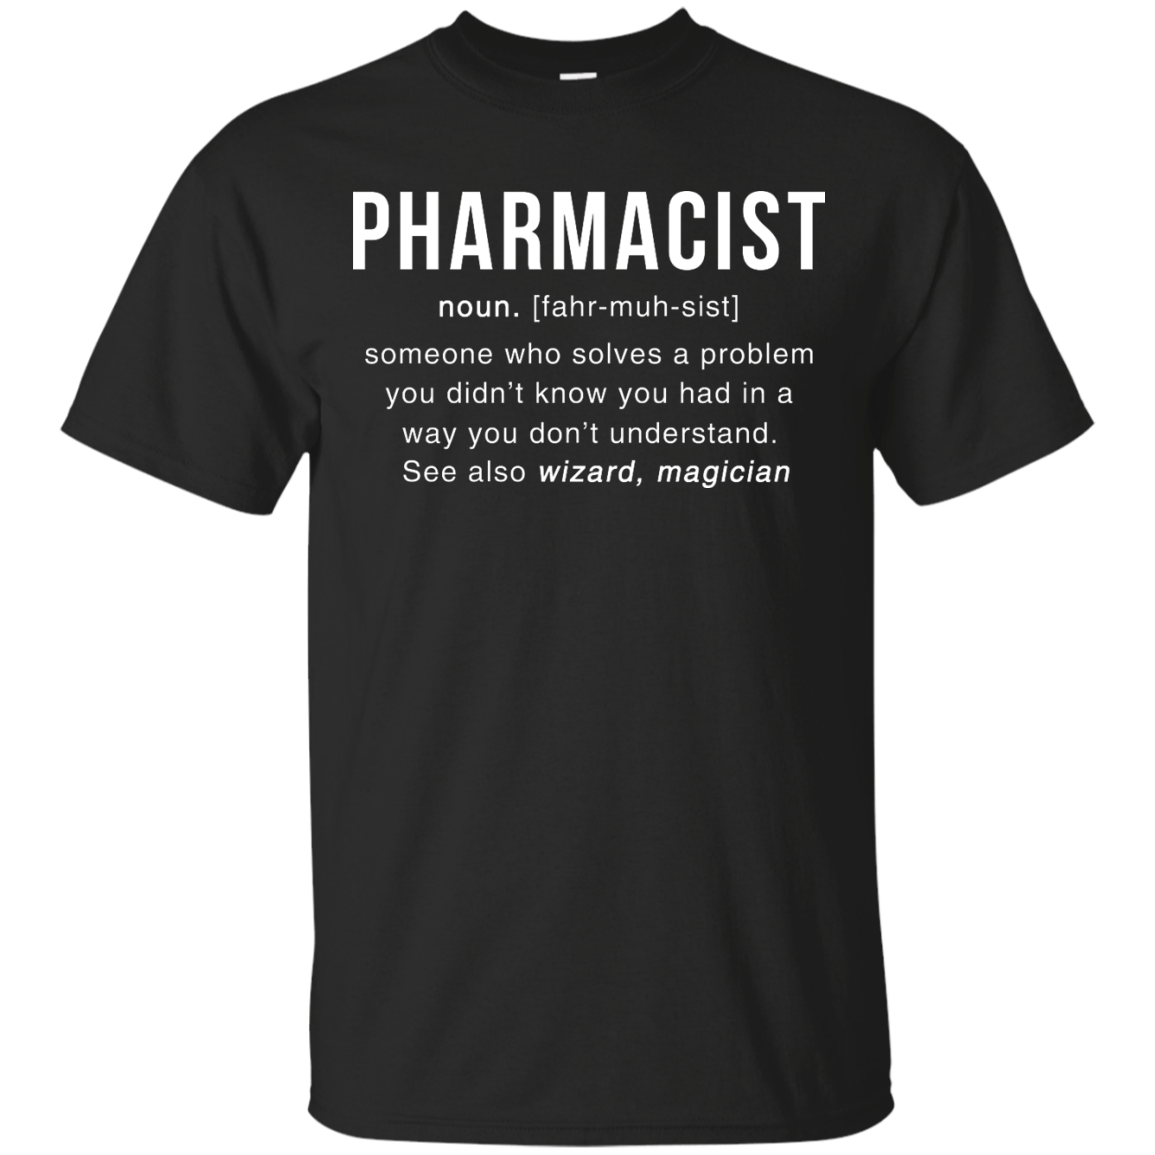 Pharmacist Meaning T shirt - Pharmacist Noun Definition